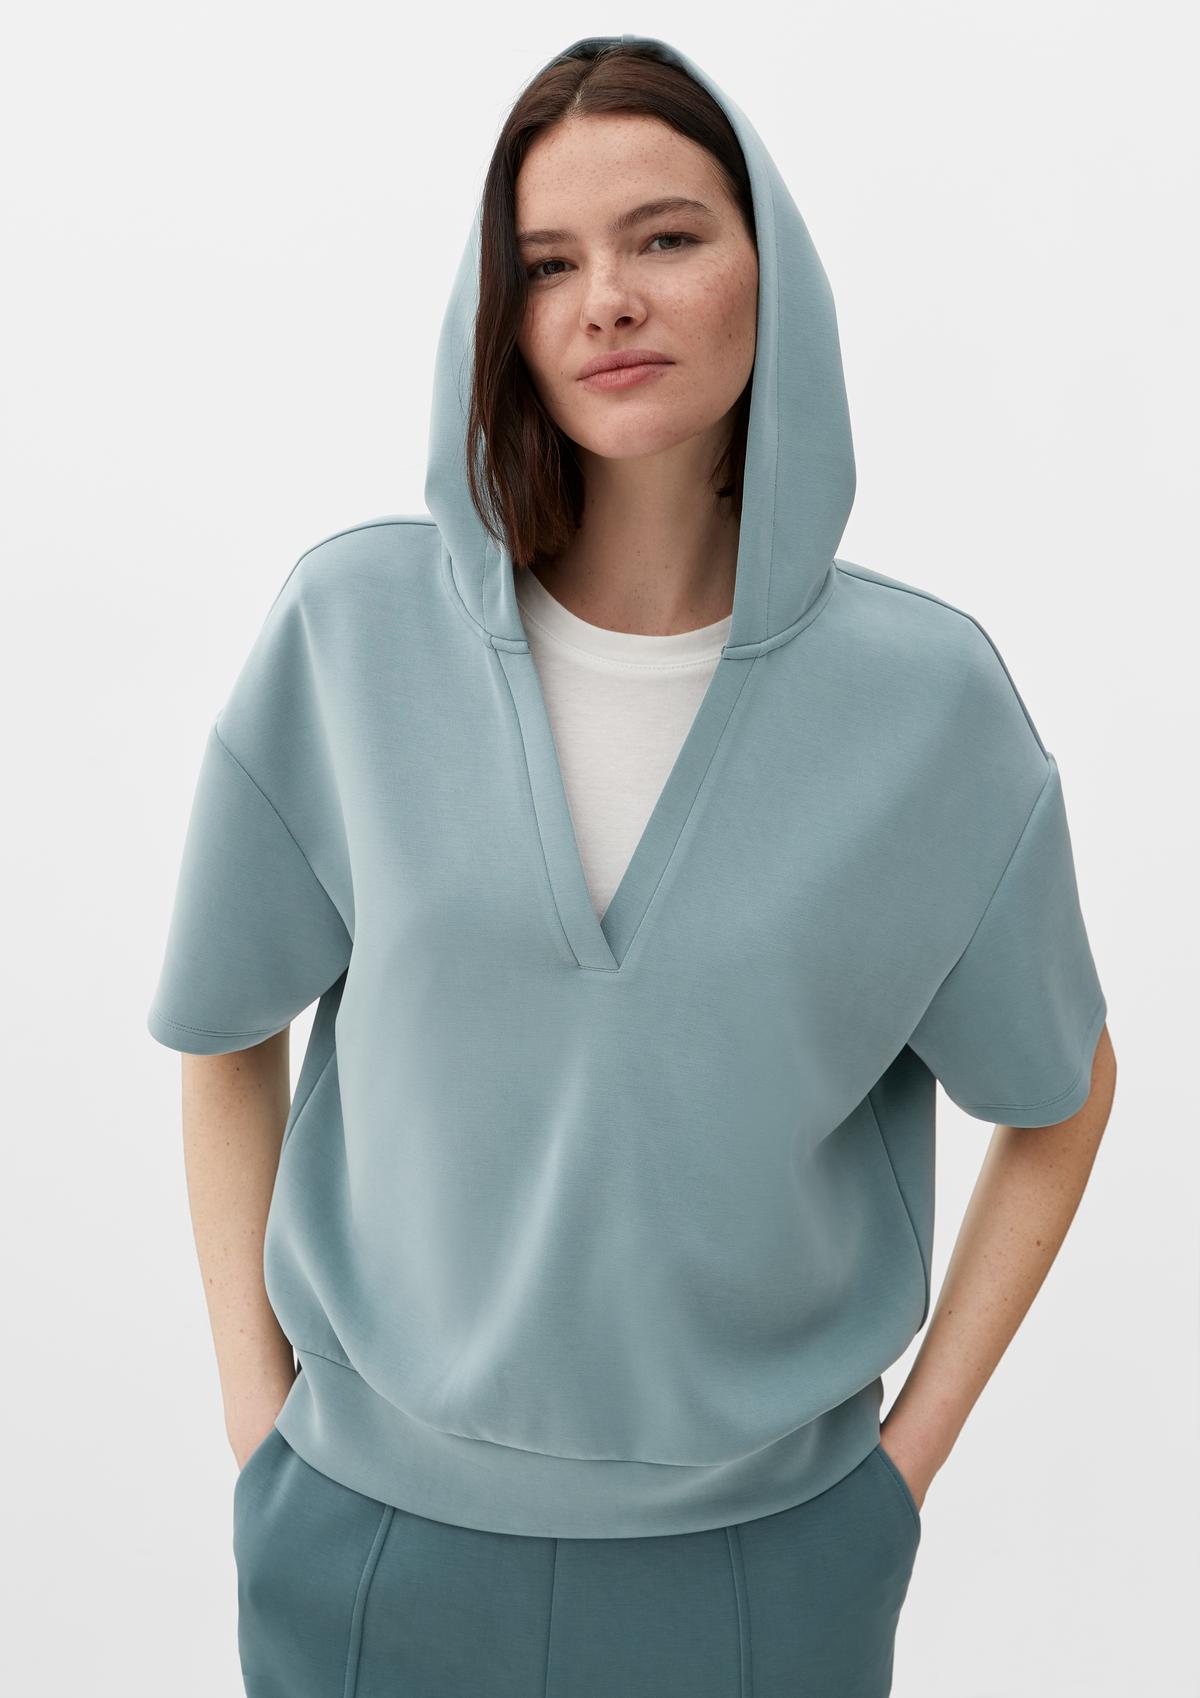 Hooded sweatshirt made of a modal blend